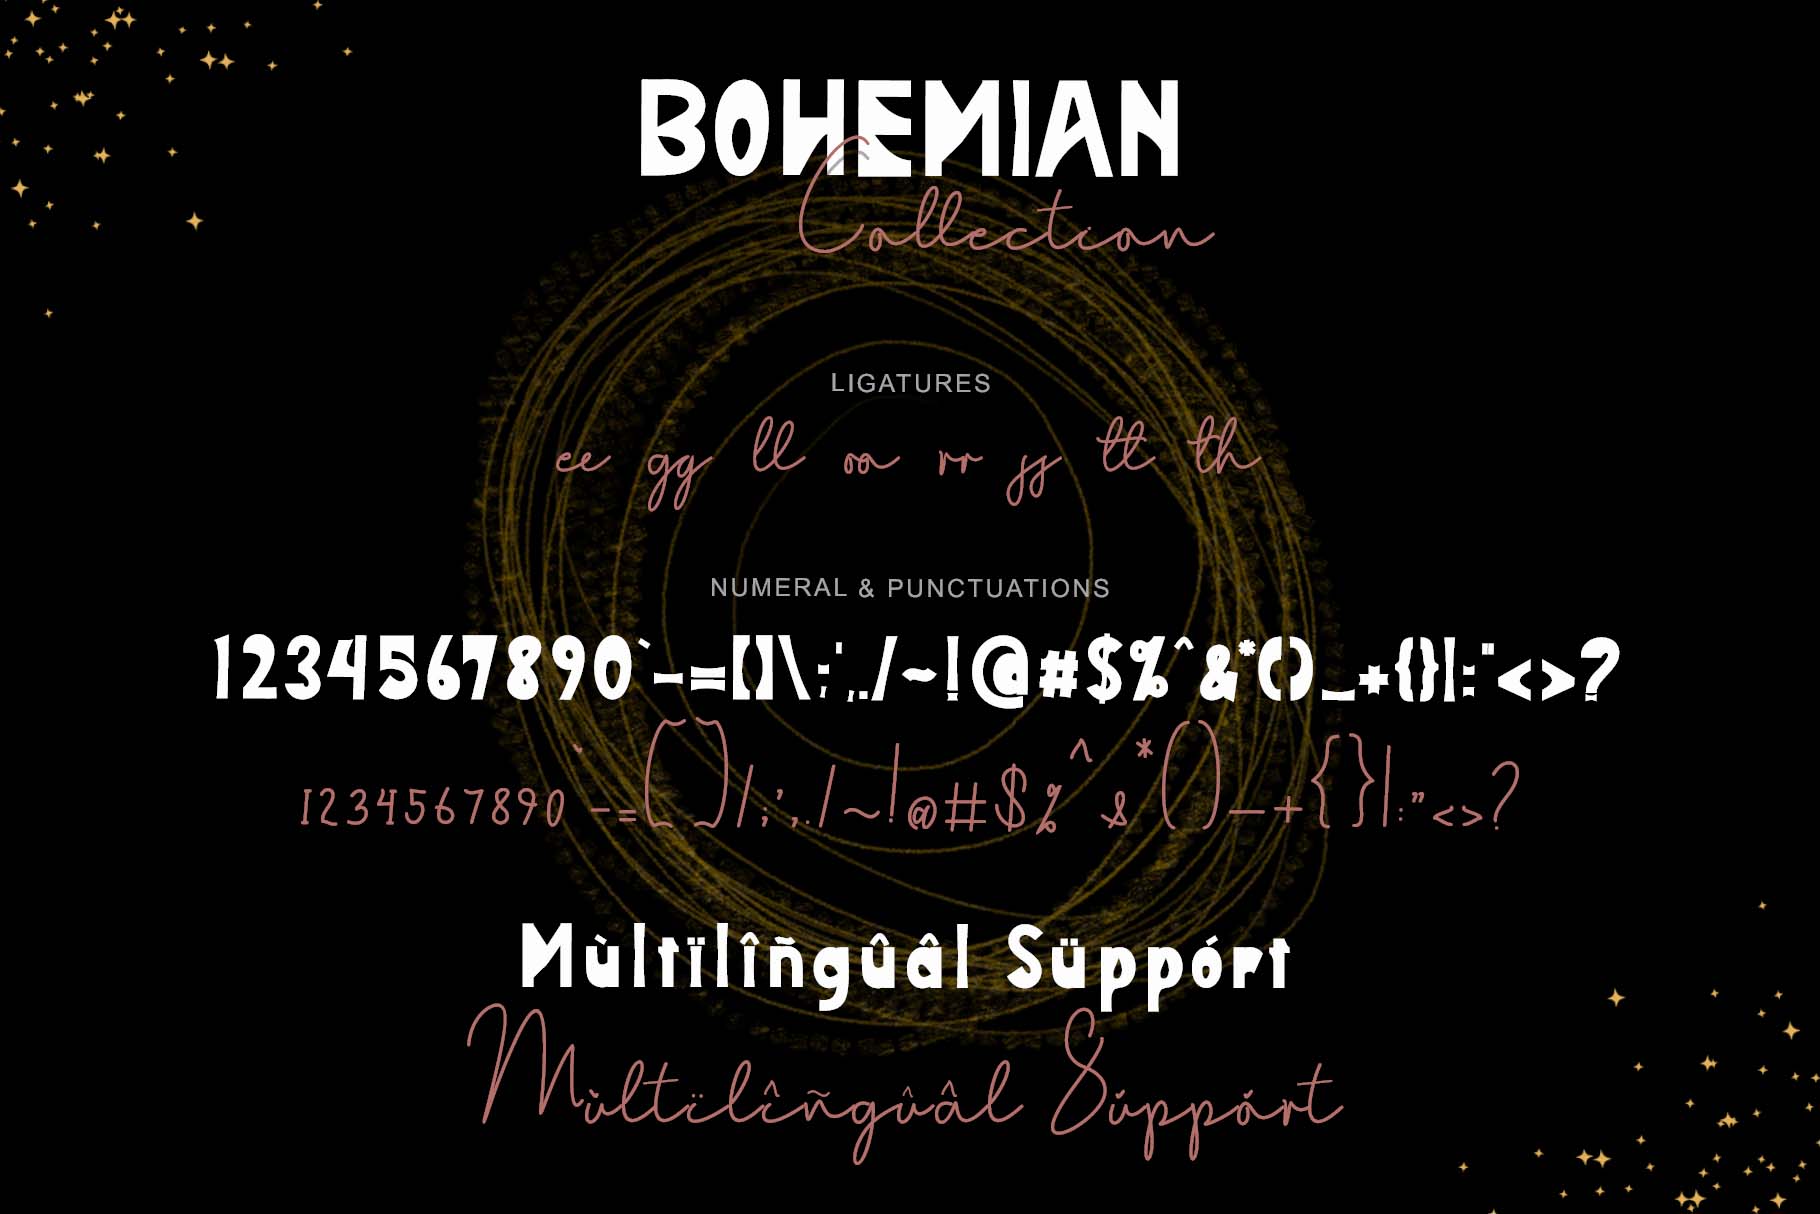 Bohemian Collection Demo